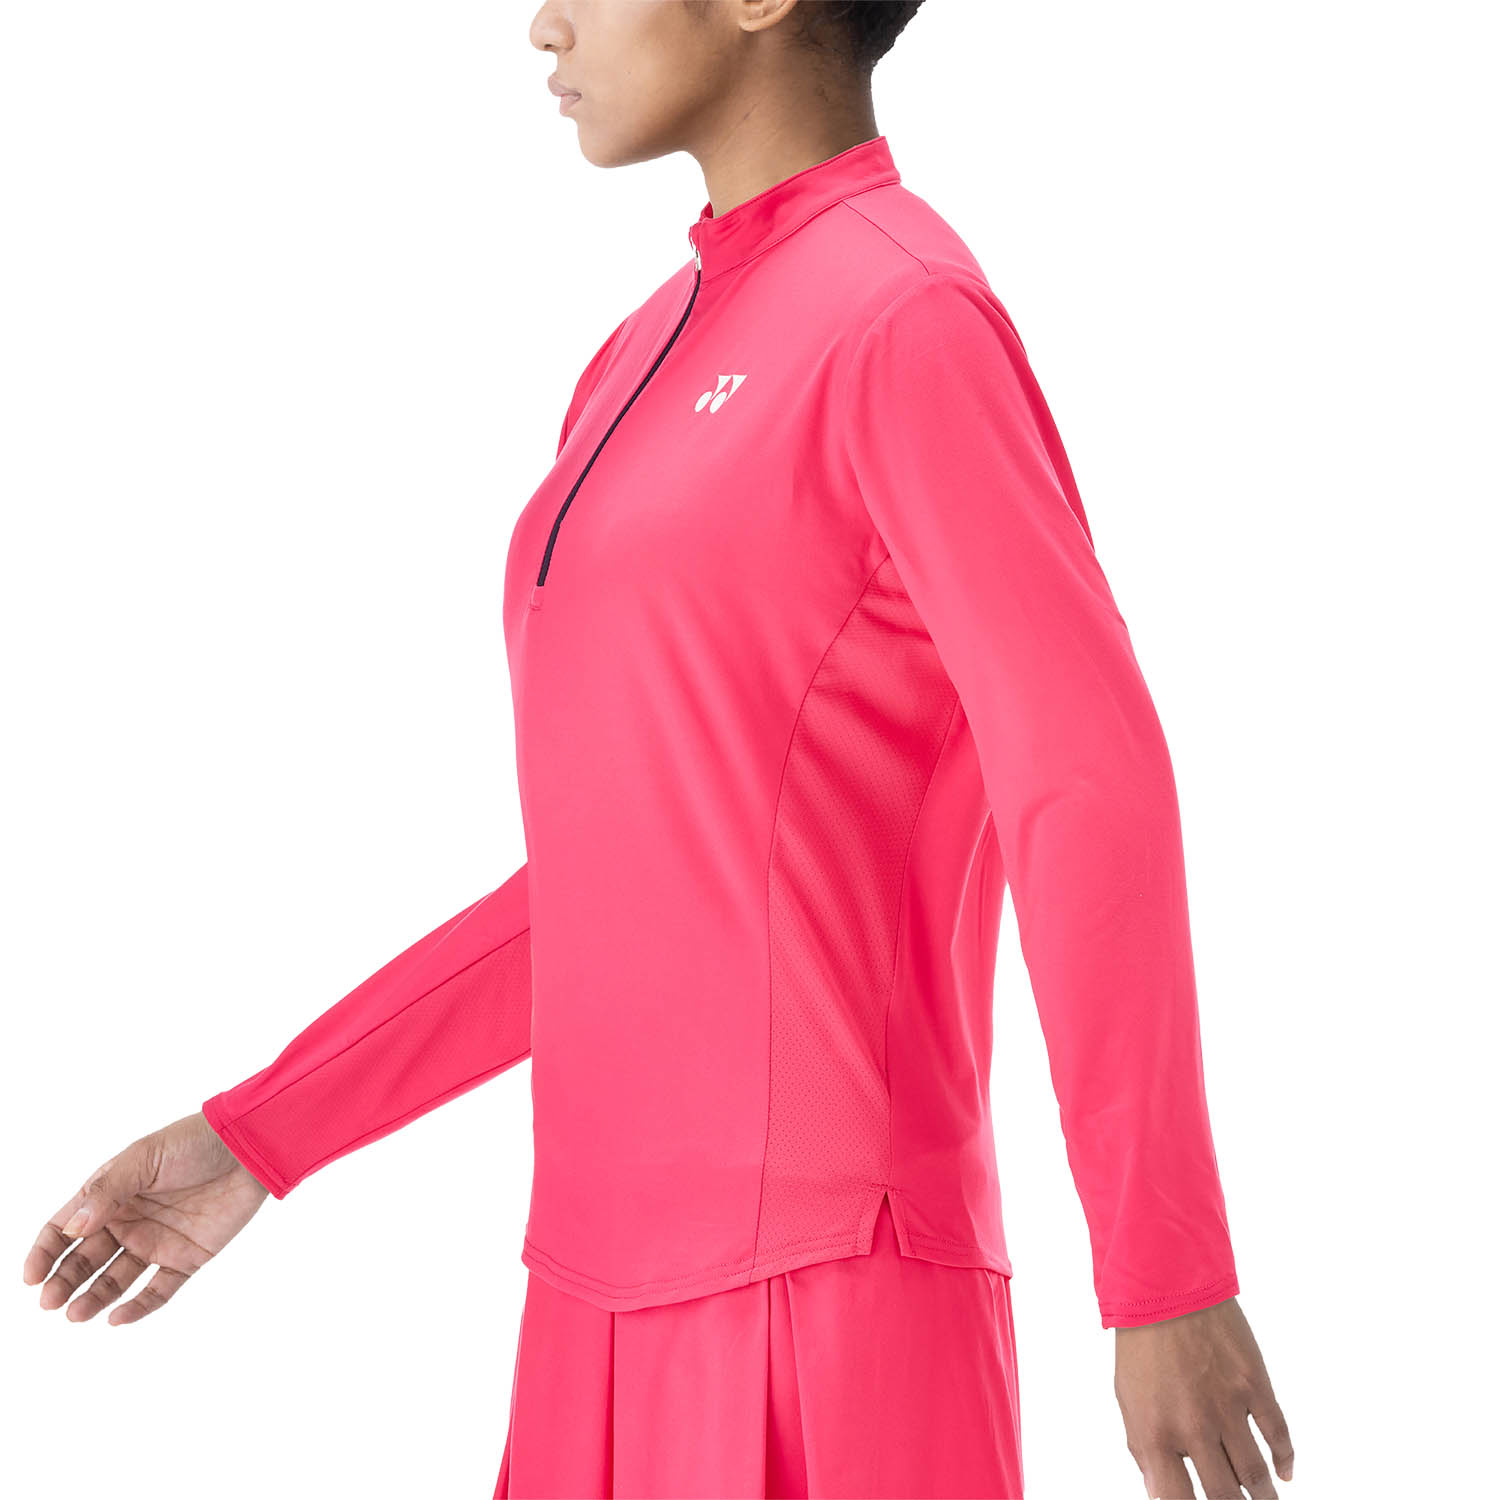 Yonex Tournament Shirt - Rose Pink